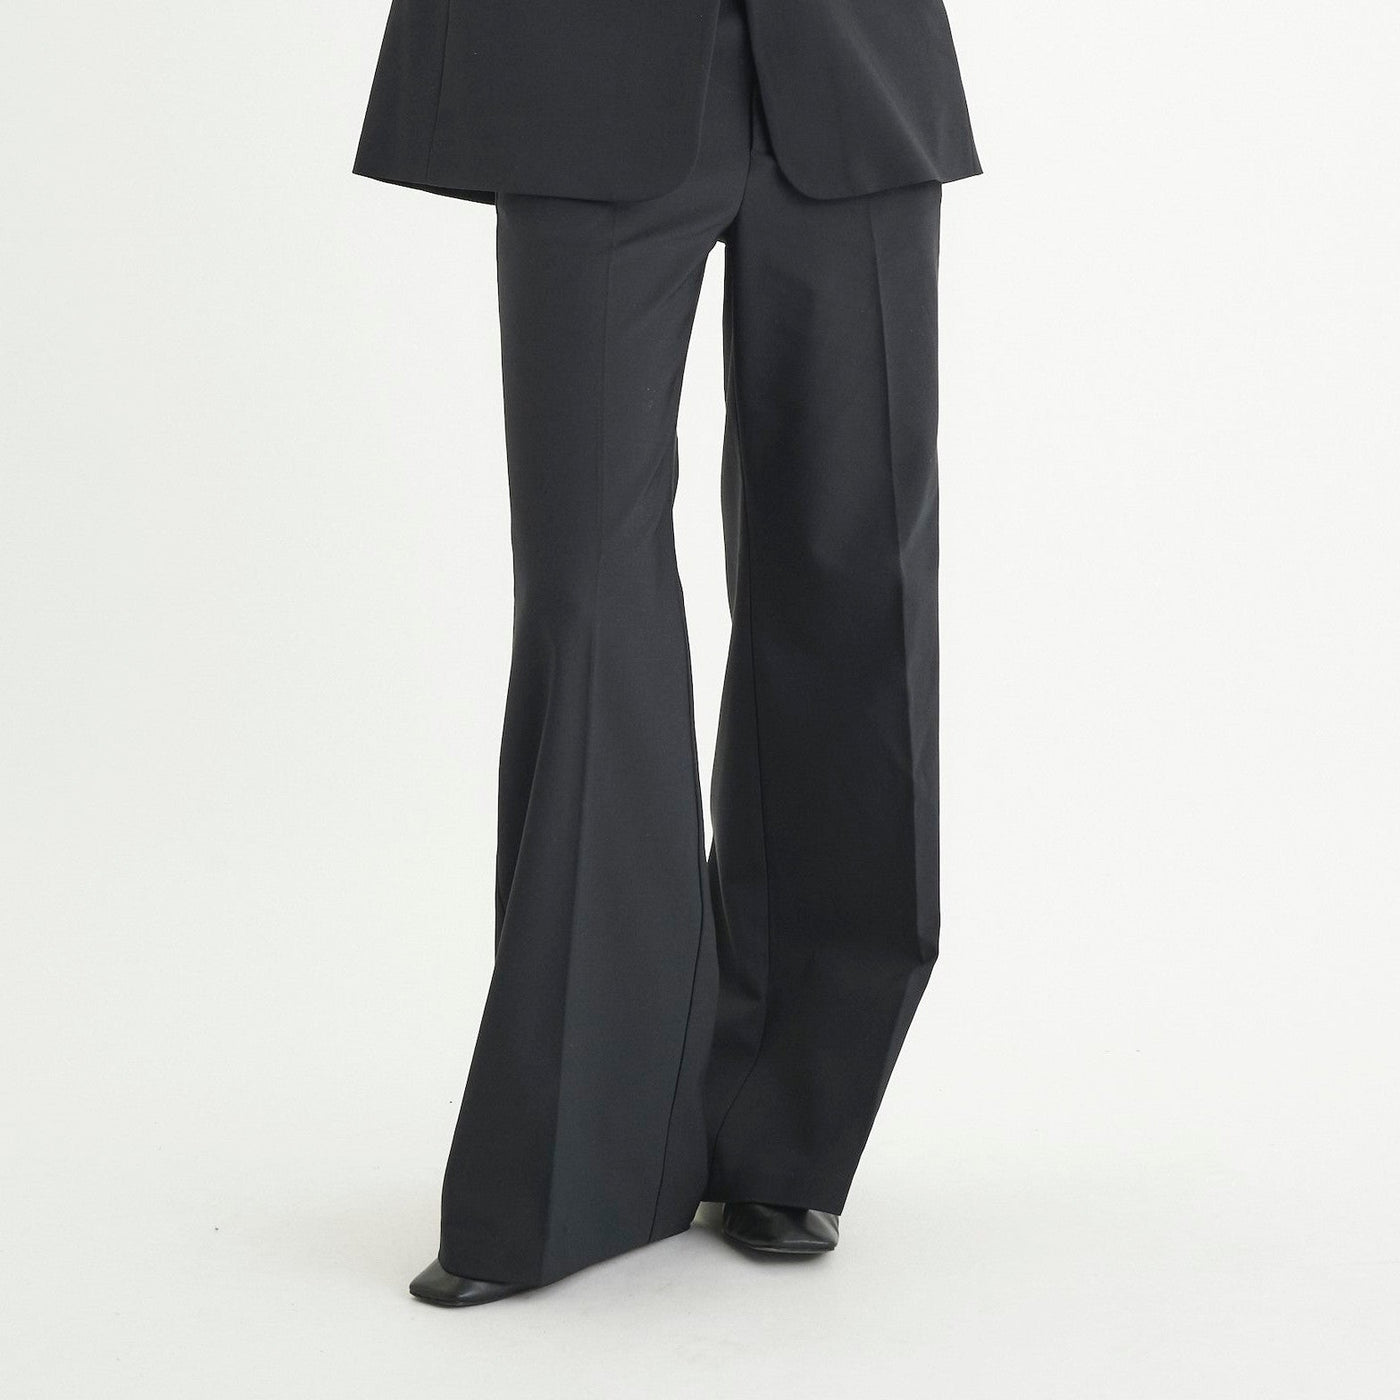 Gotstyle Fashion - InWear Pants Regular Fit Wide Bottom Pant - Black